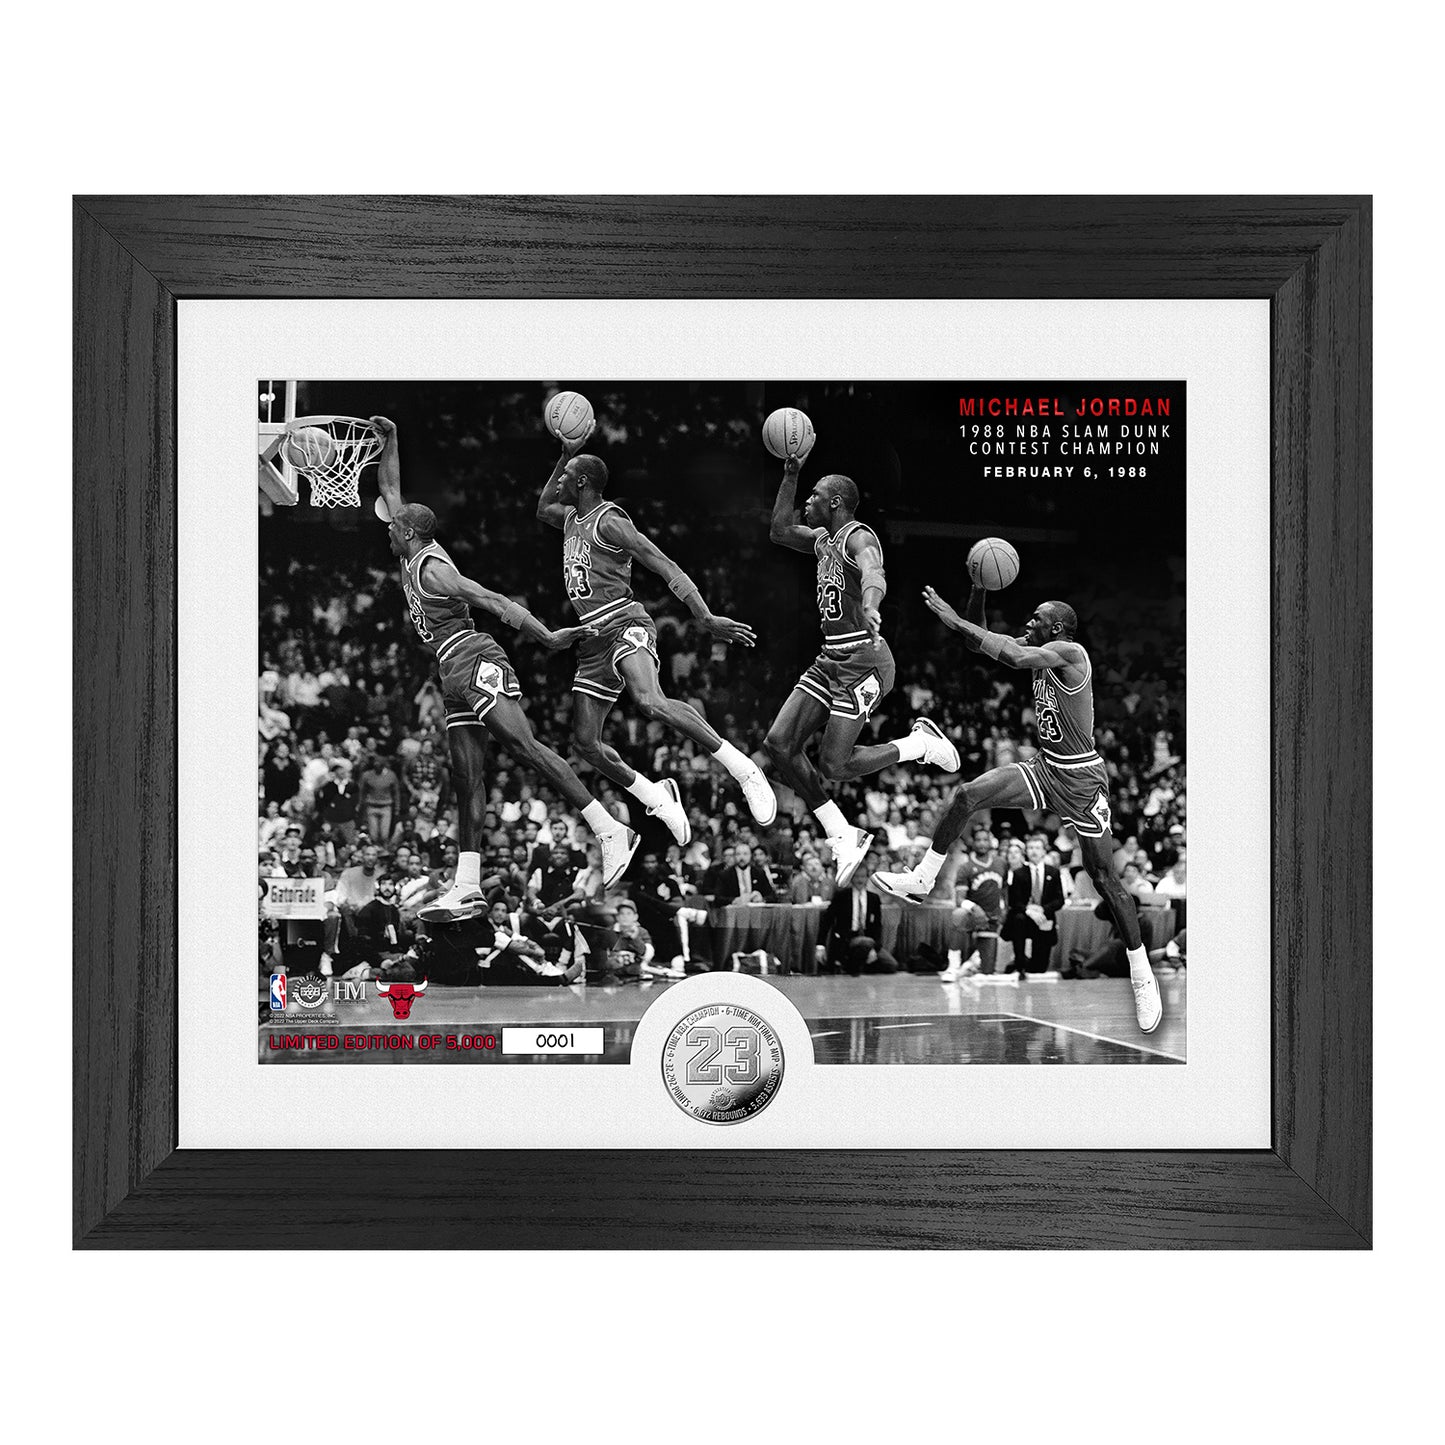 Chicago Bulls Michael Jordan 1988 NBA Slam Dunk Champion Silver